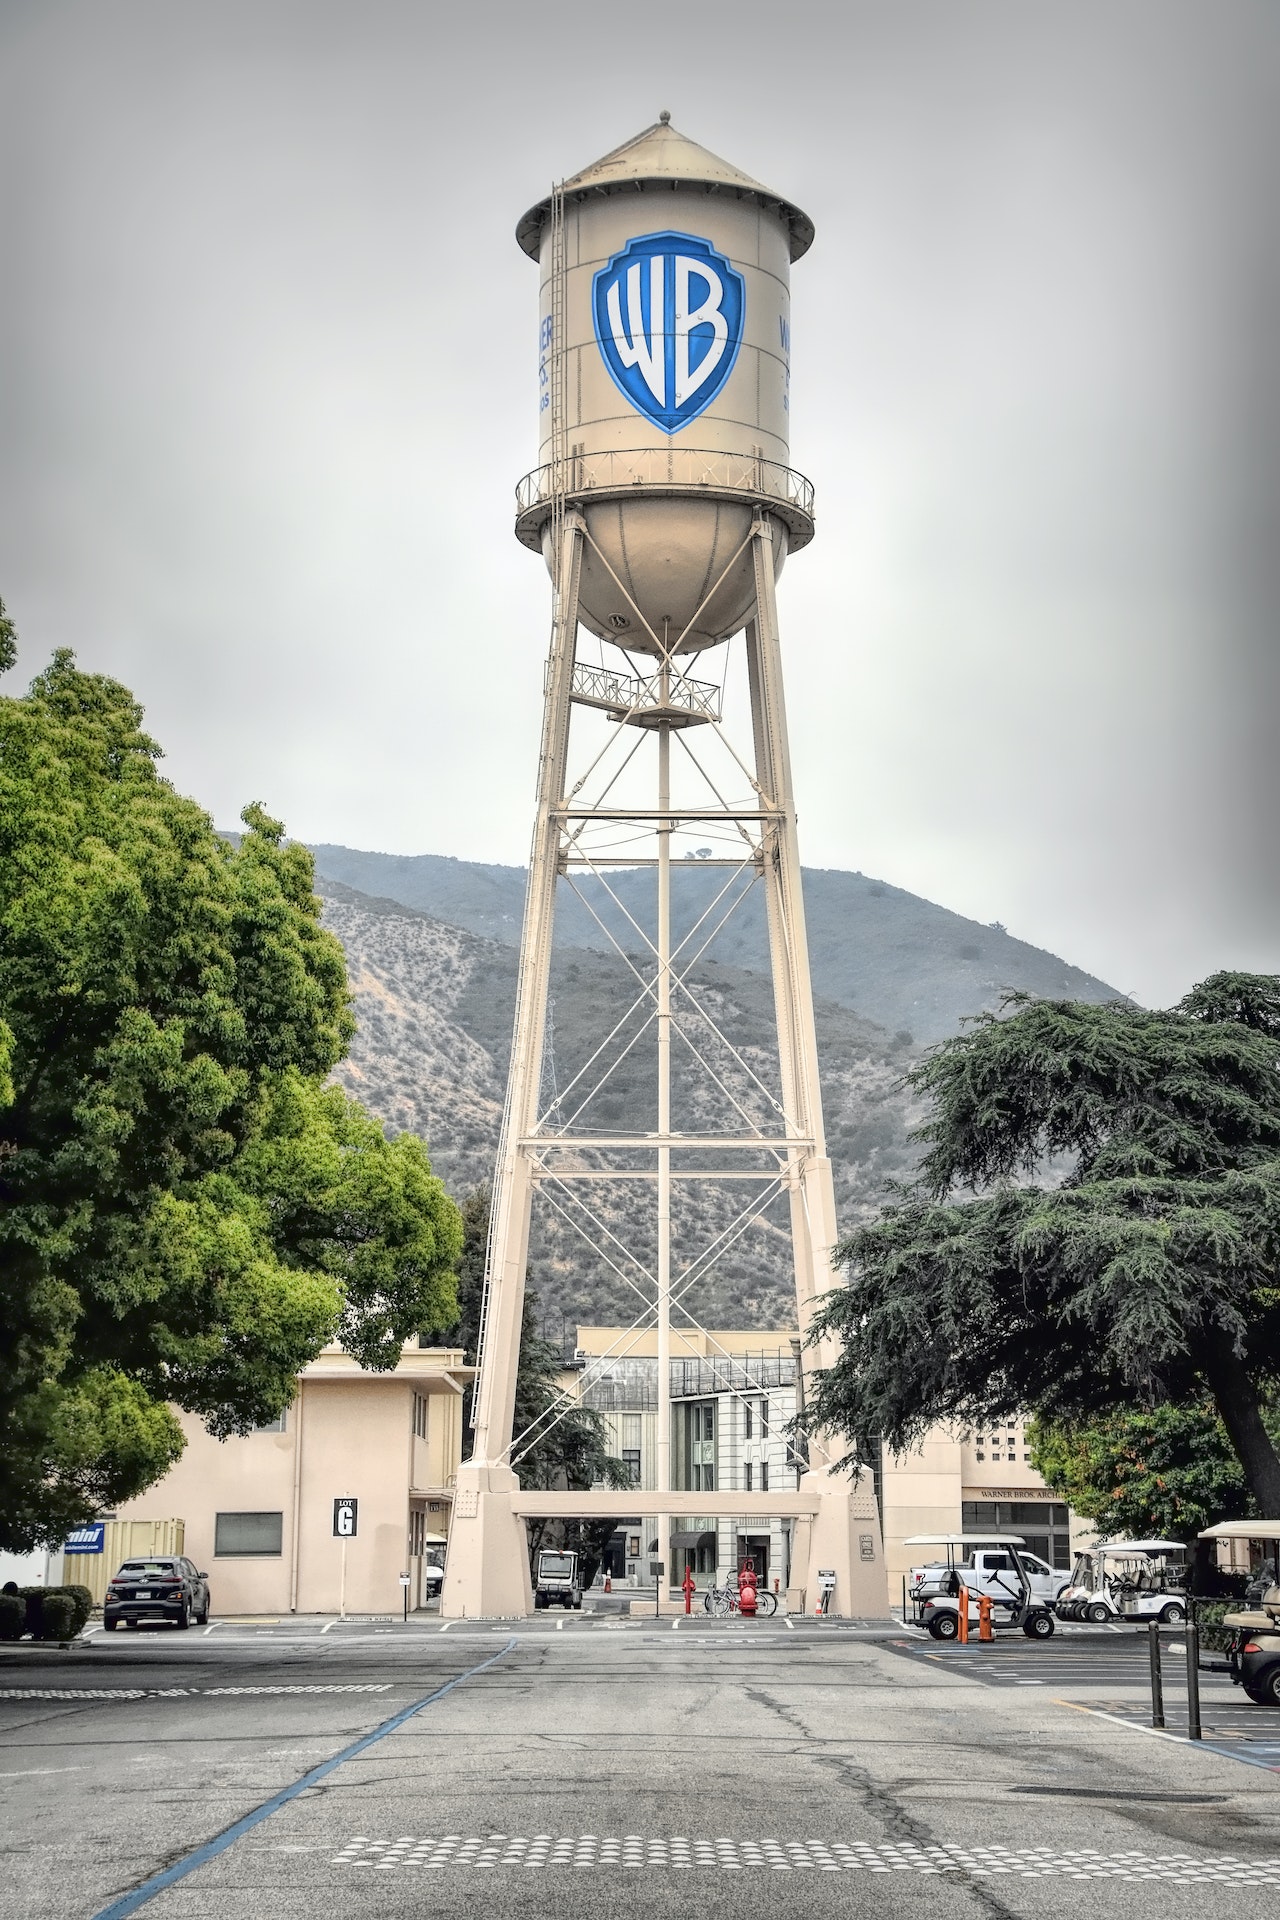 Warner Bros studios in Burbank